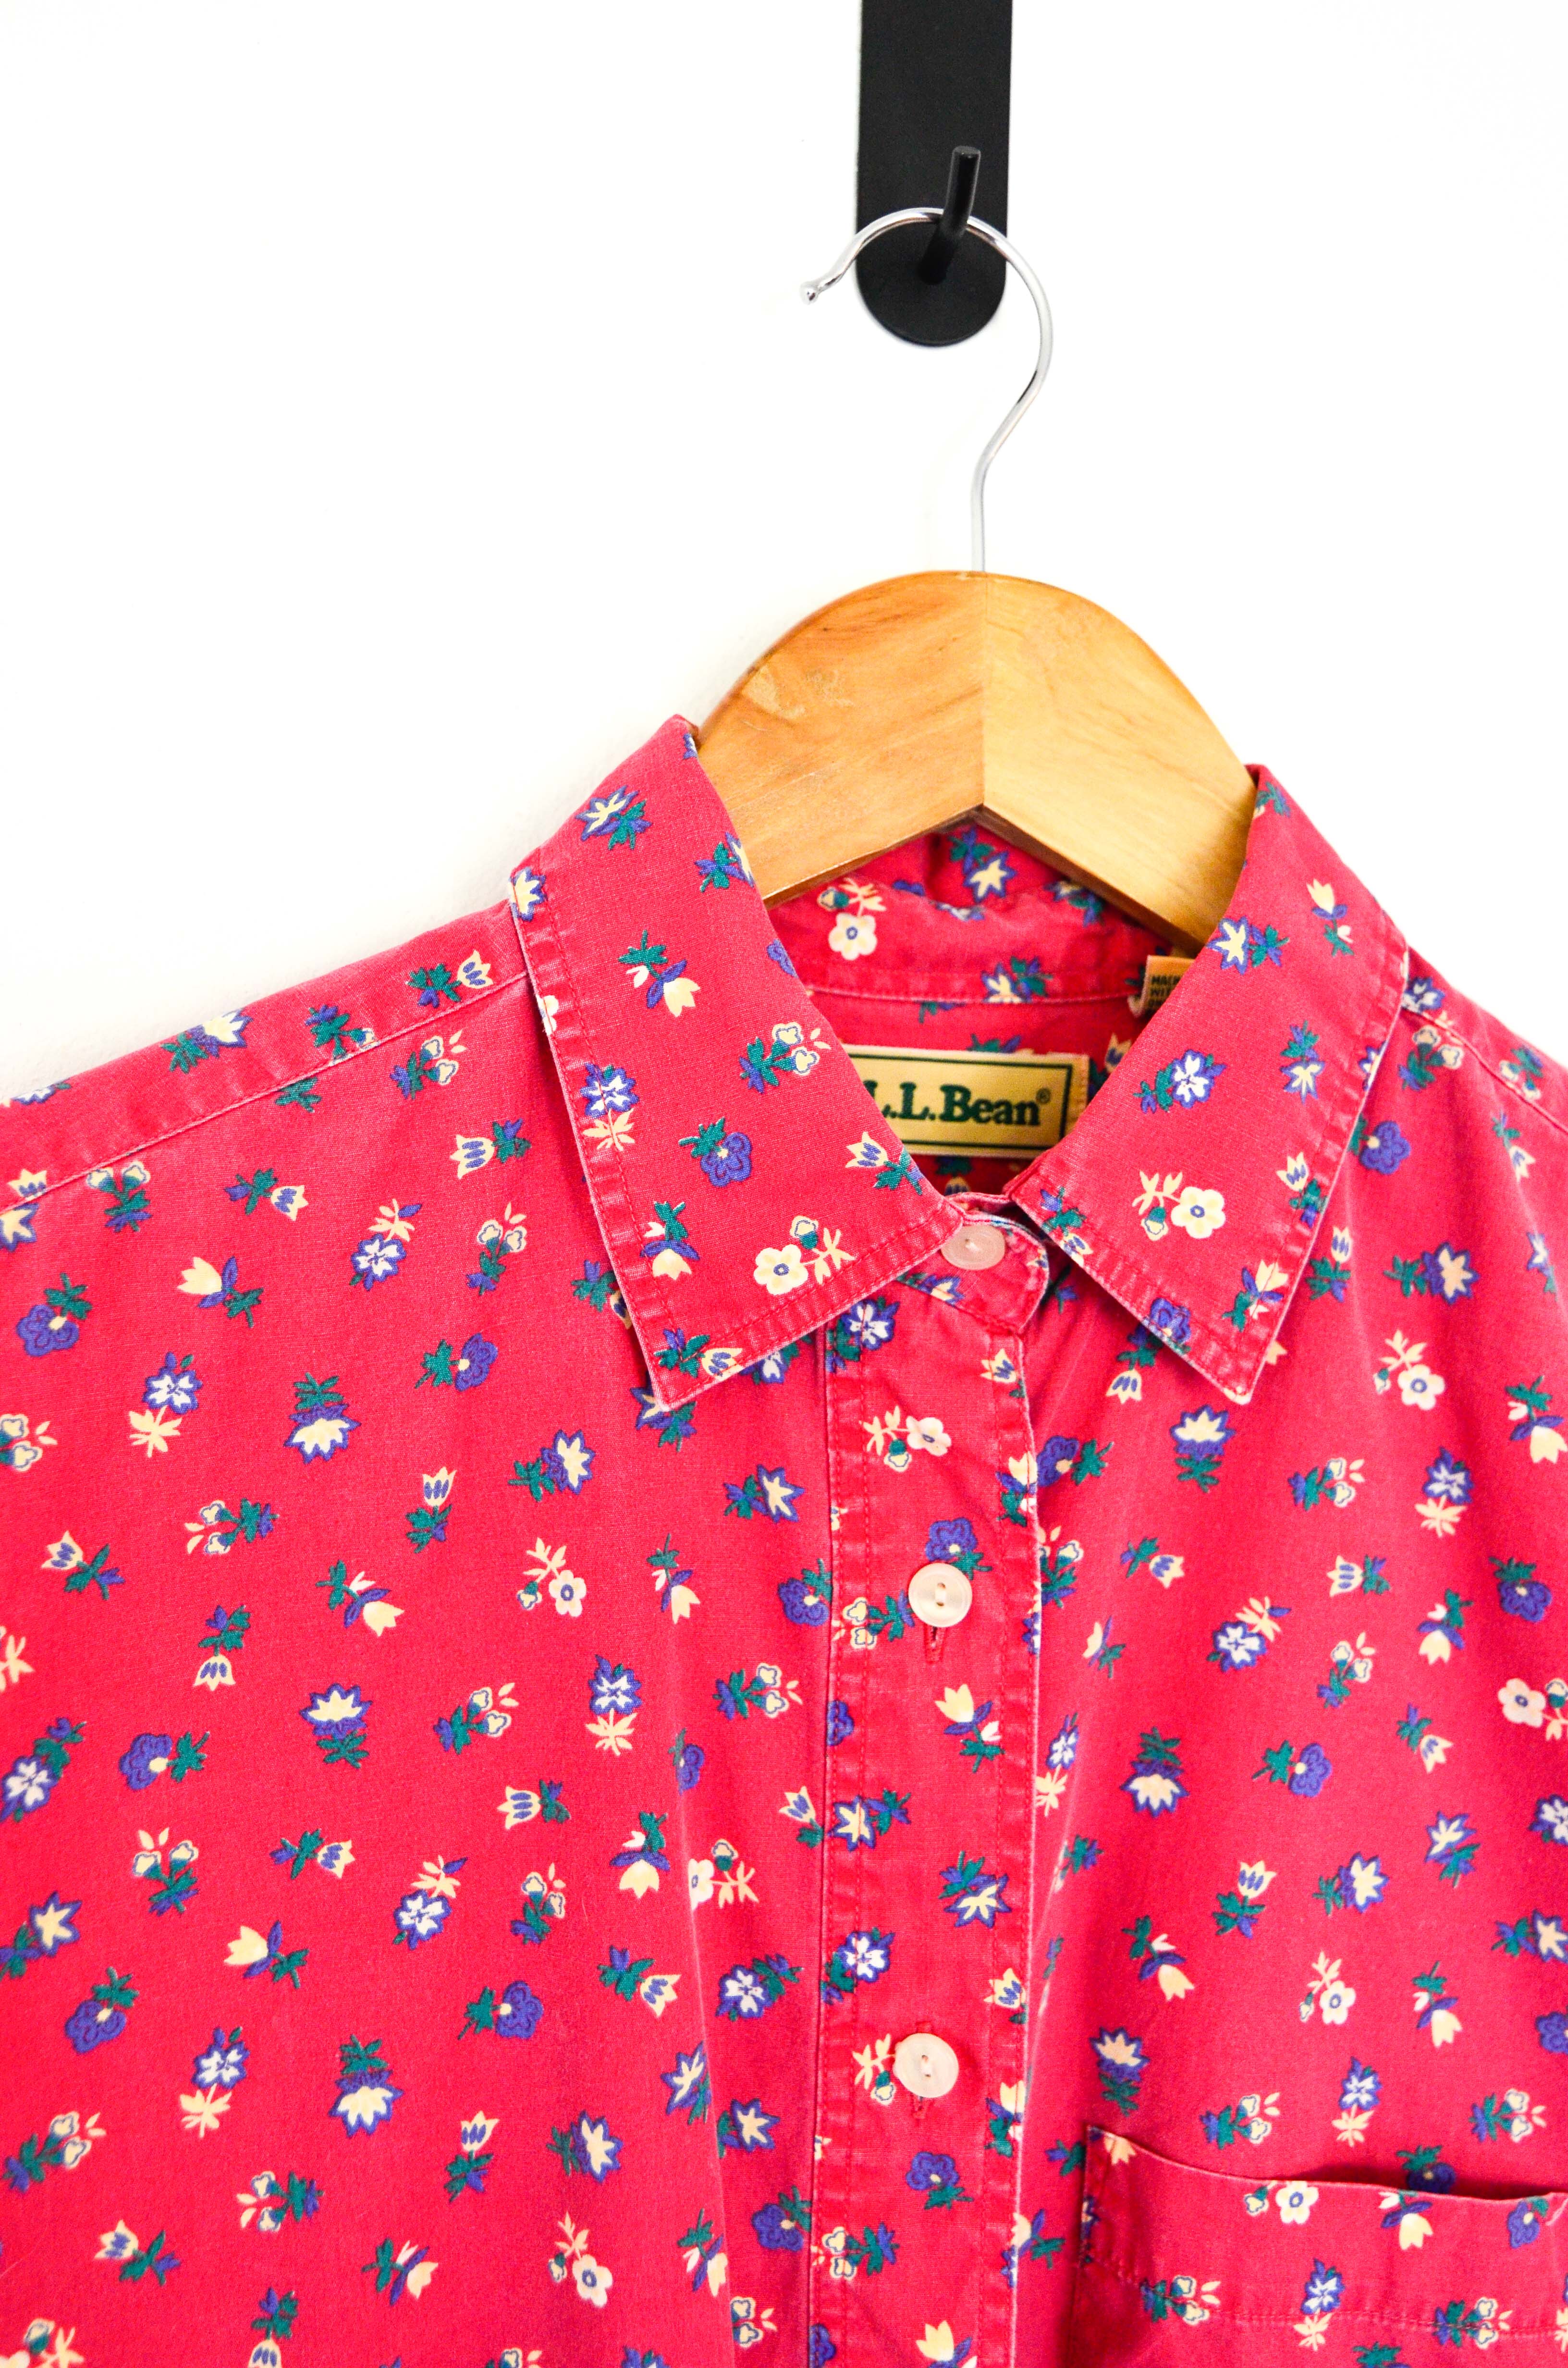 Camisa coral floral cotton